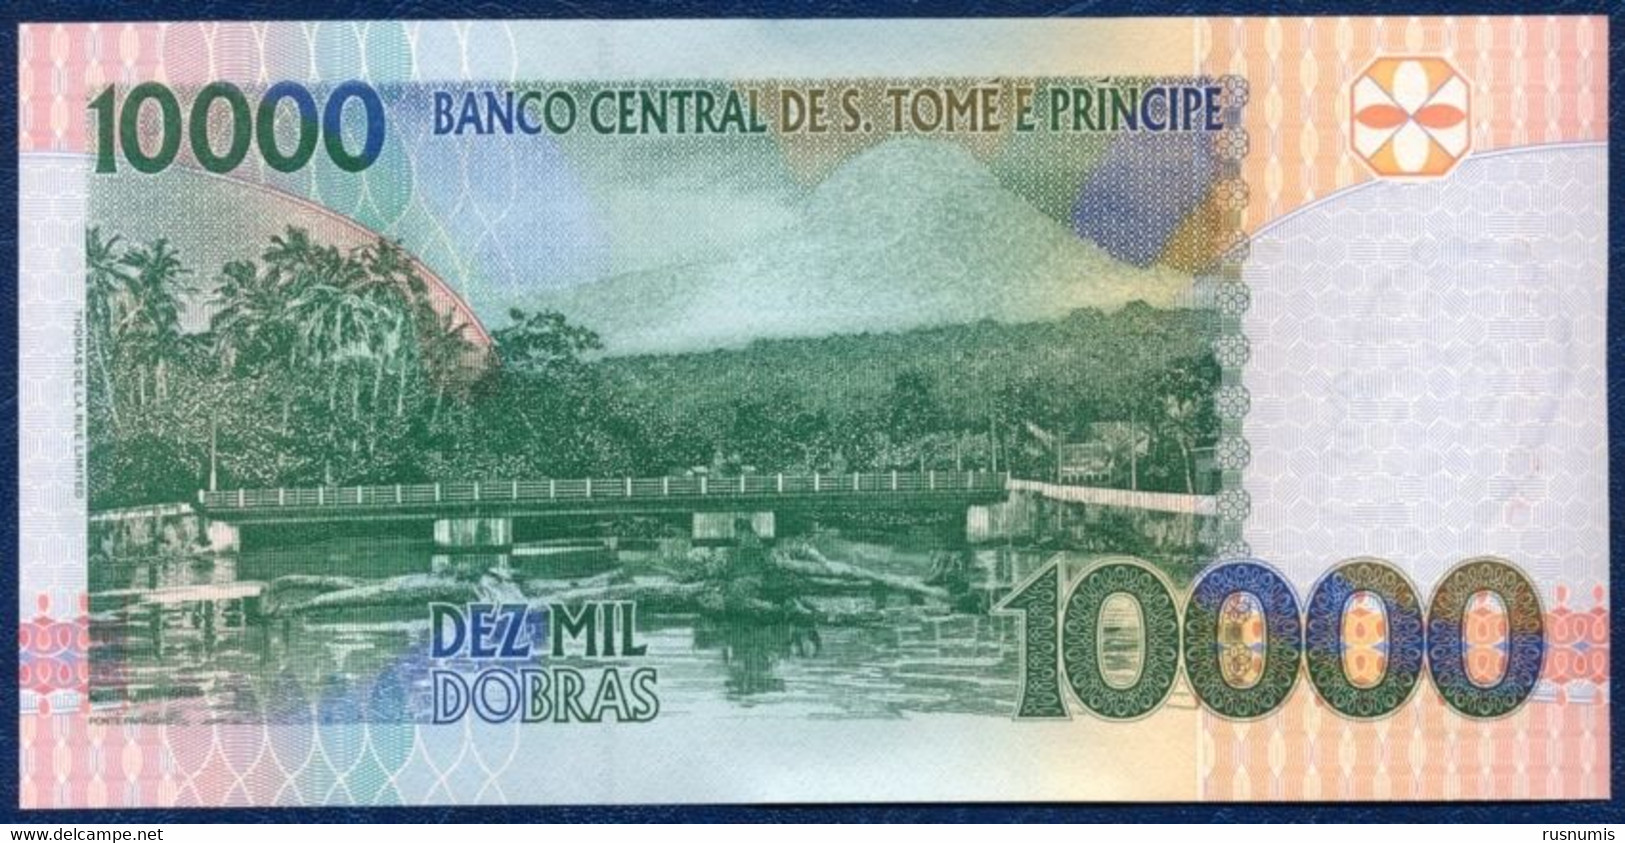 SAN TOME - SAO TOME AND PRINCIPE - ST. THOMAS 10000 DOBRAS PICK-66a OSSOBO BIRD OISEAU - PAPAGAIO BRIDGE 1996 UNC - Sao Tome And Principe